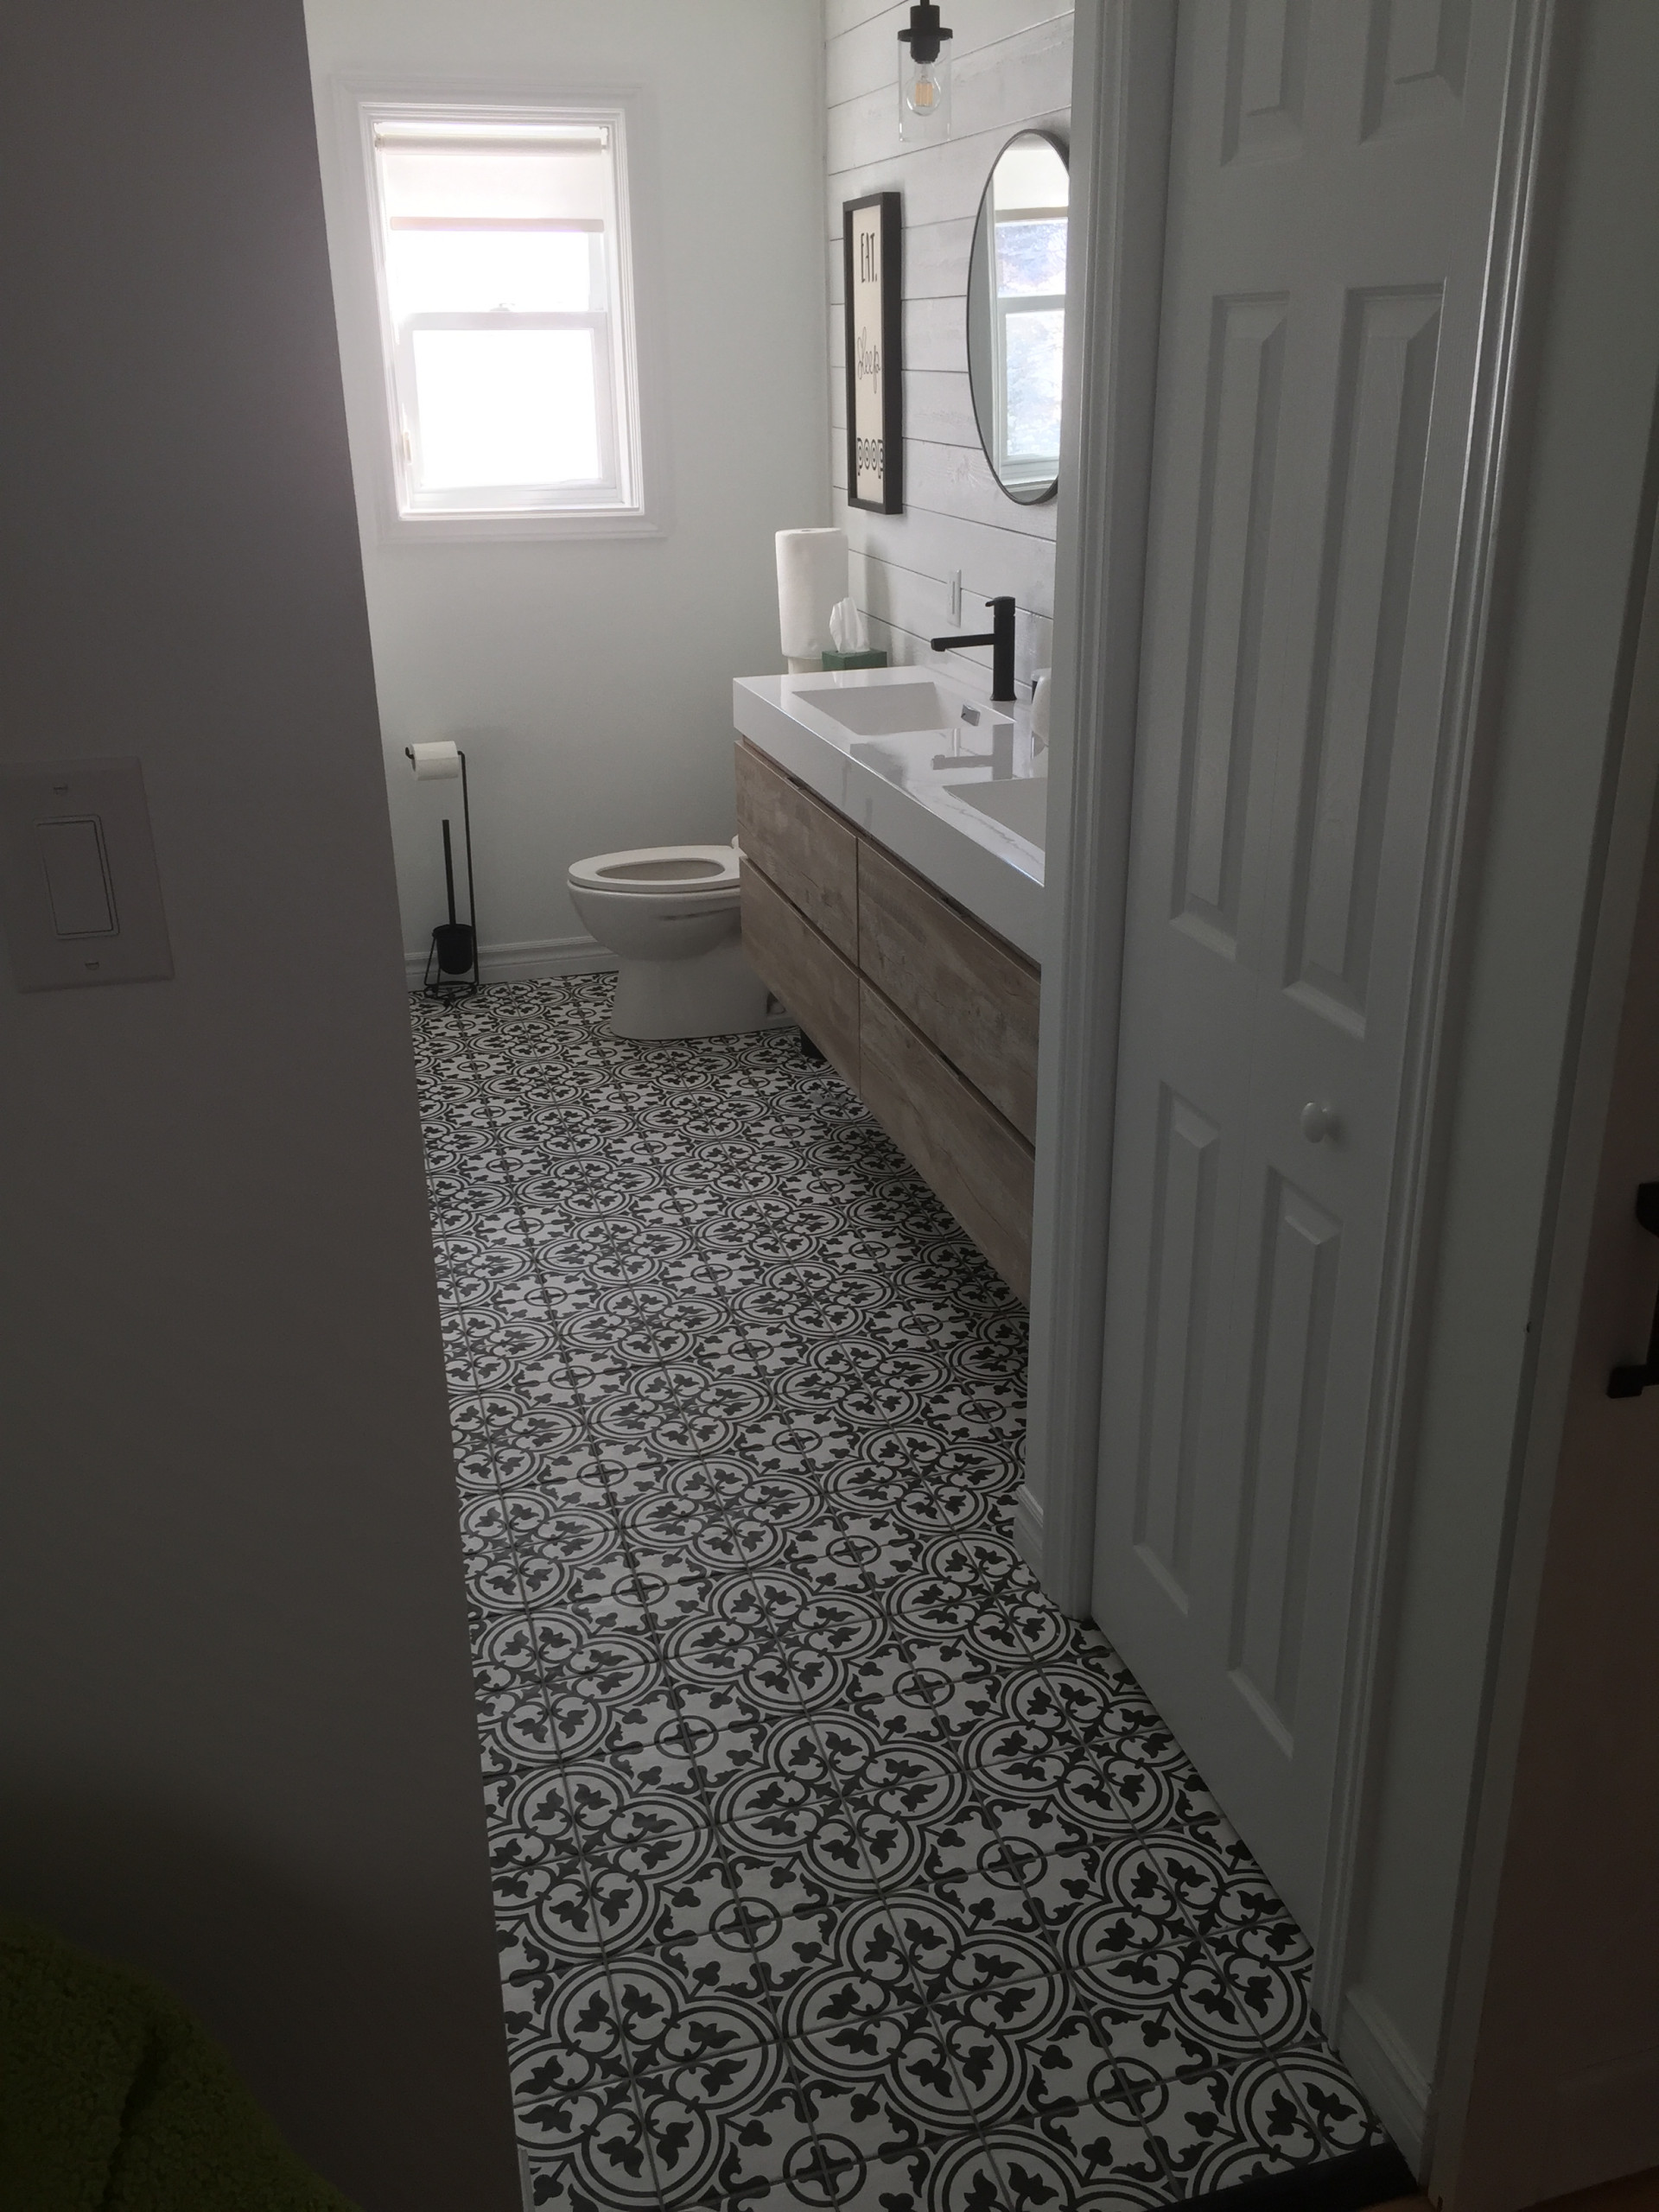 Featured Bathrooms